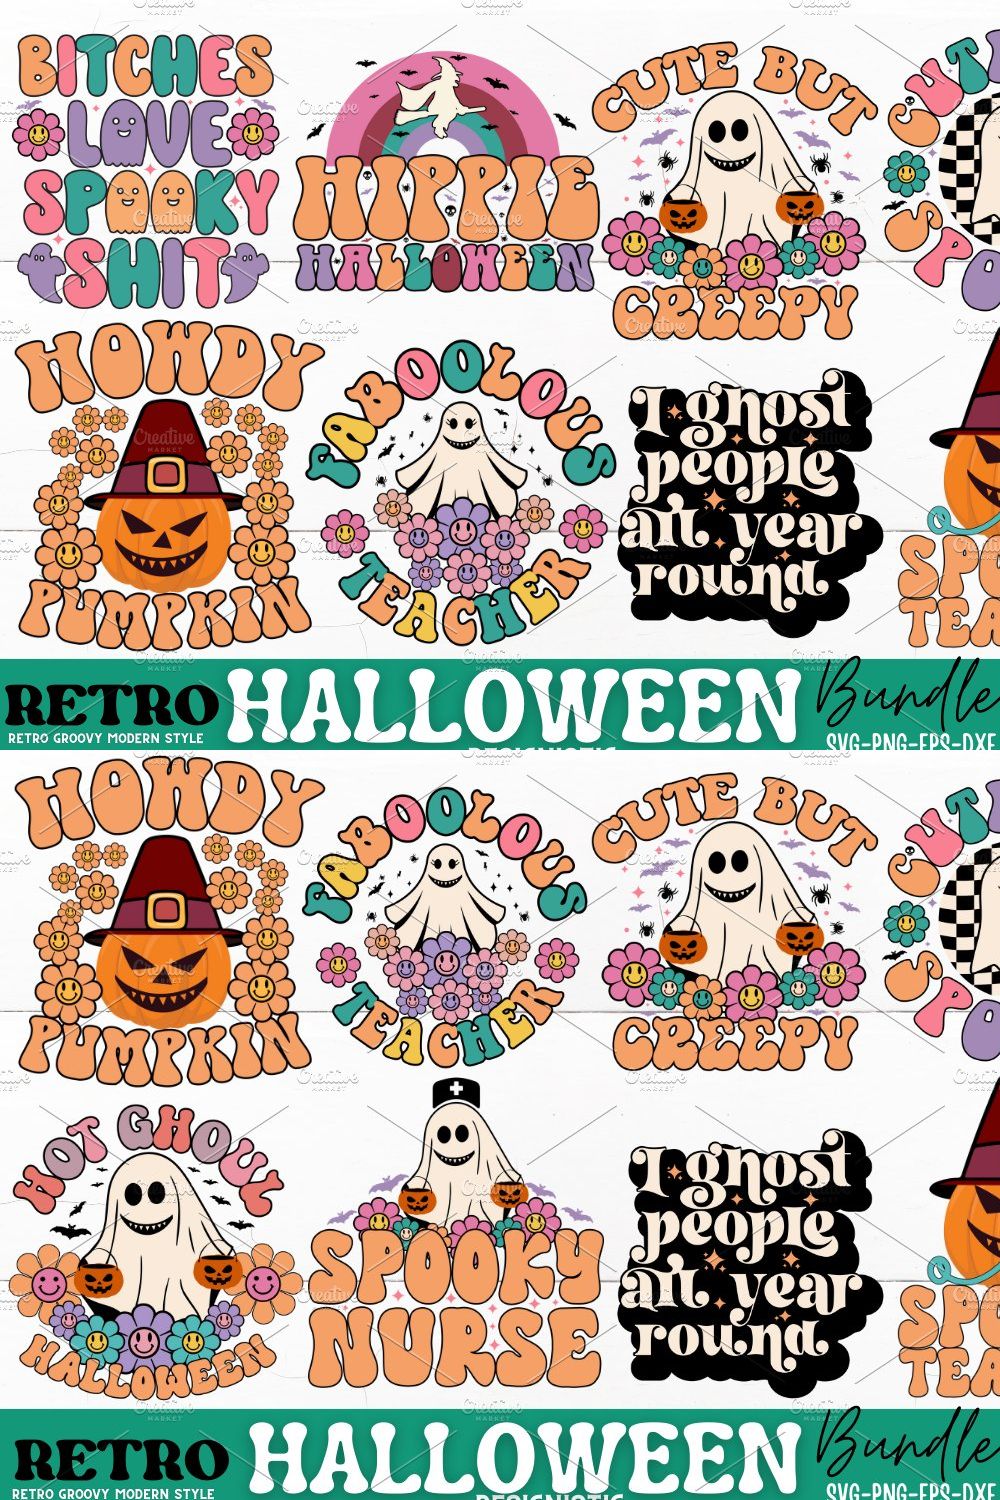 Retro Halloween SVG Bundle pinterest preview image.